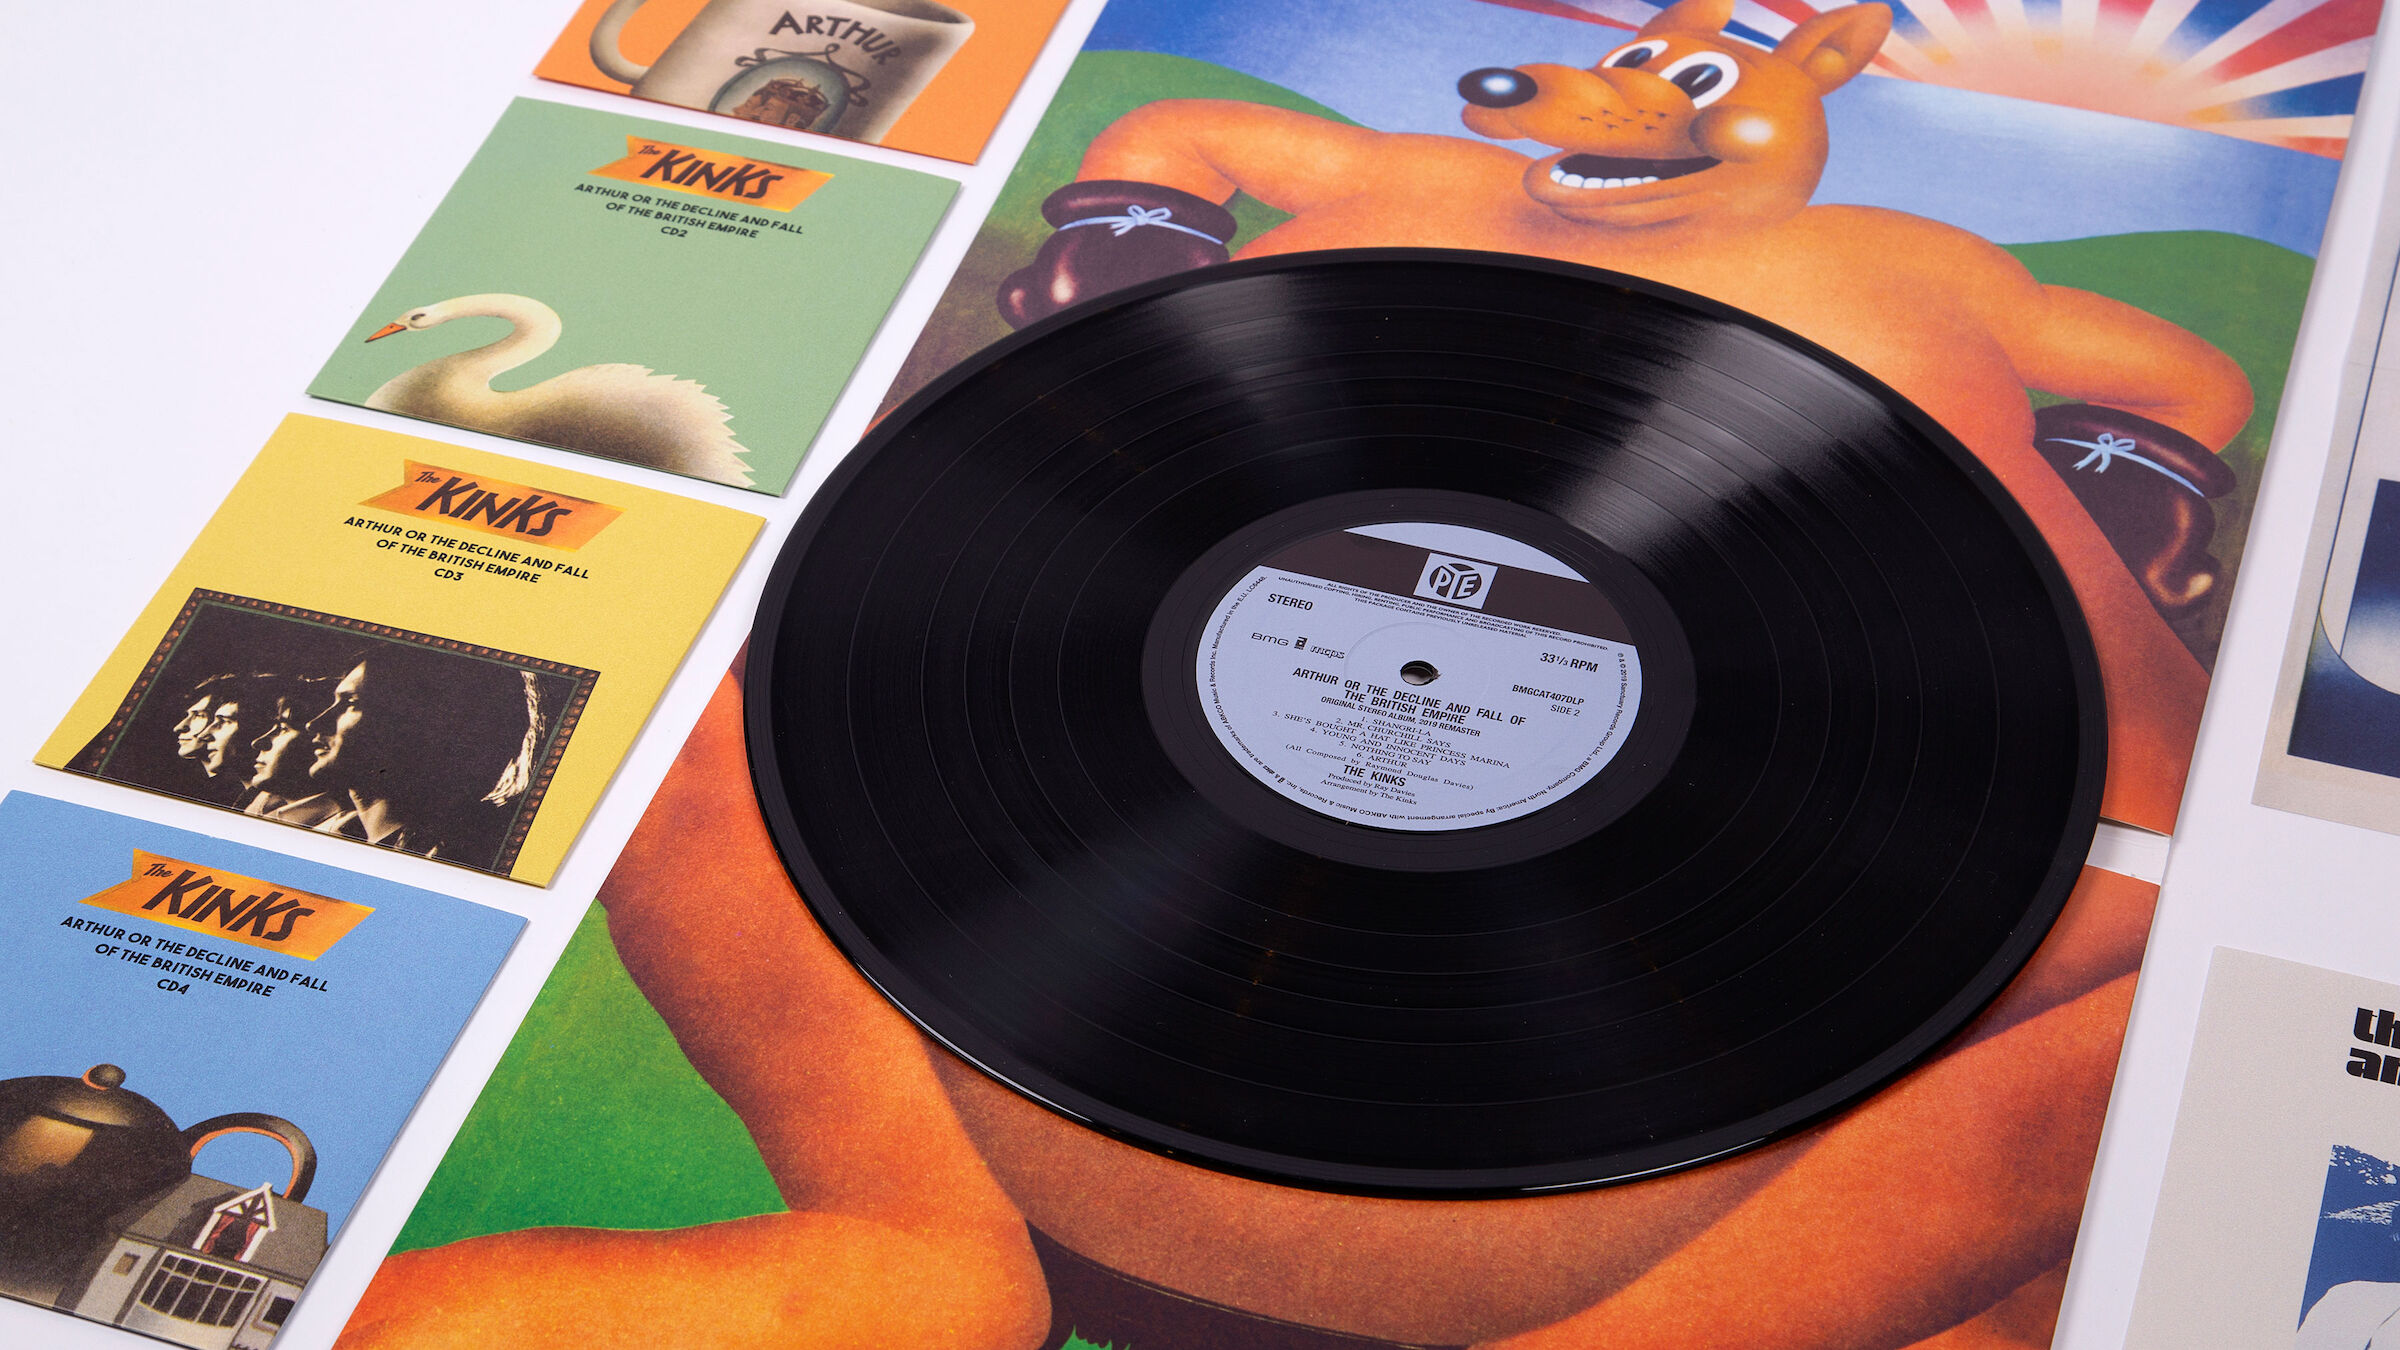 The Kinks Arthur Anniversary Vinyl Release